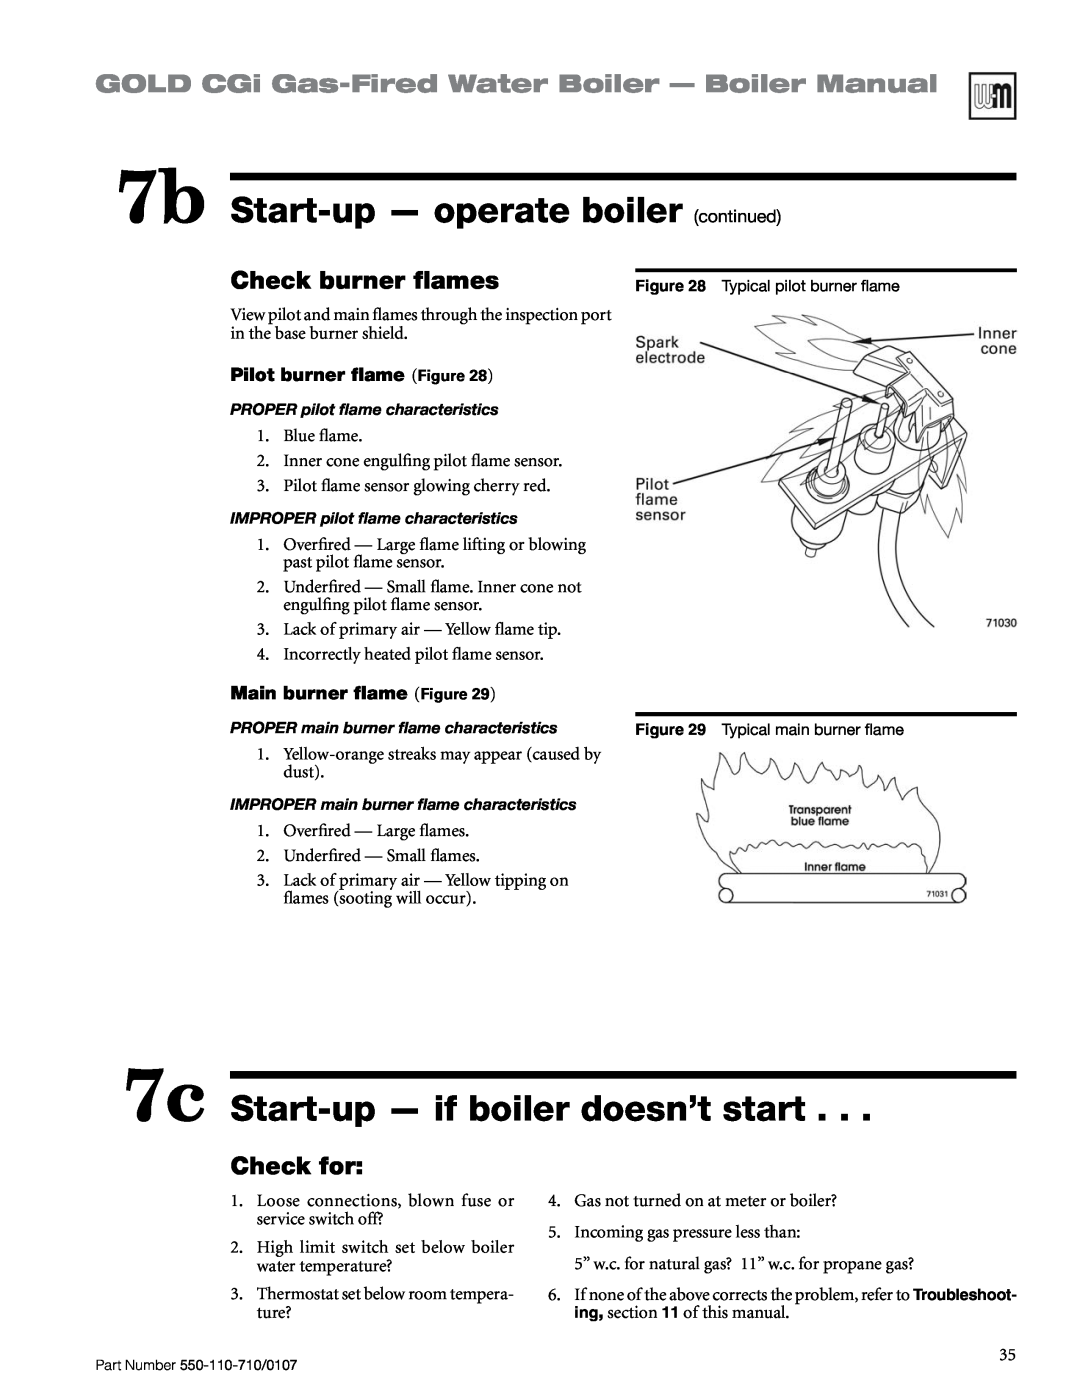 Weil-McLain Series 2 7b Start-up— operate boiler continued, 7c Start-up— if boiler doesn’t start, Main burner flame Figure 